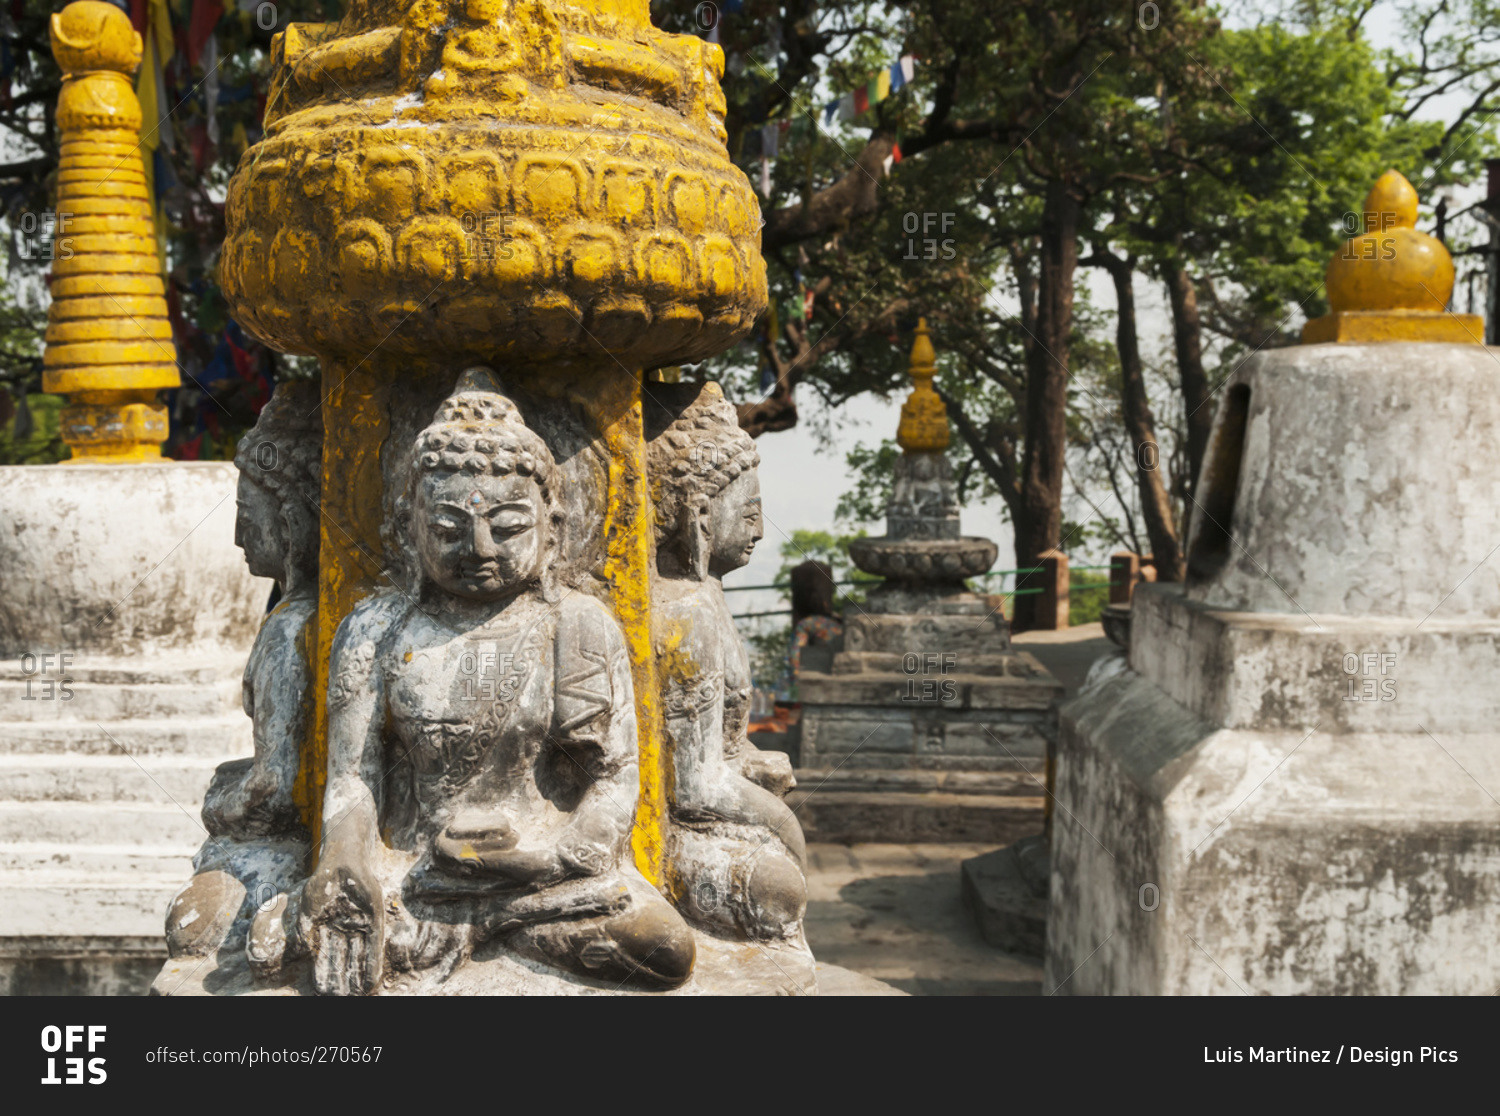 Some sculptures of Buddha in Swayambhu Temple, Kathmandu, Nepal